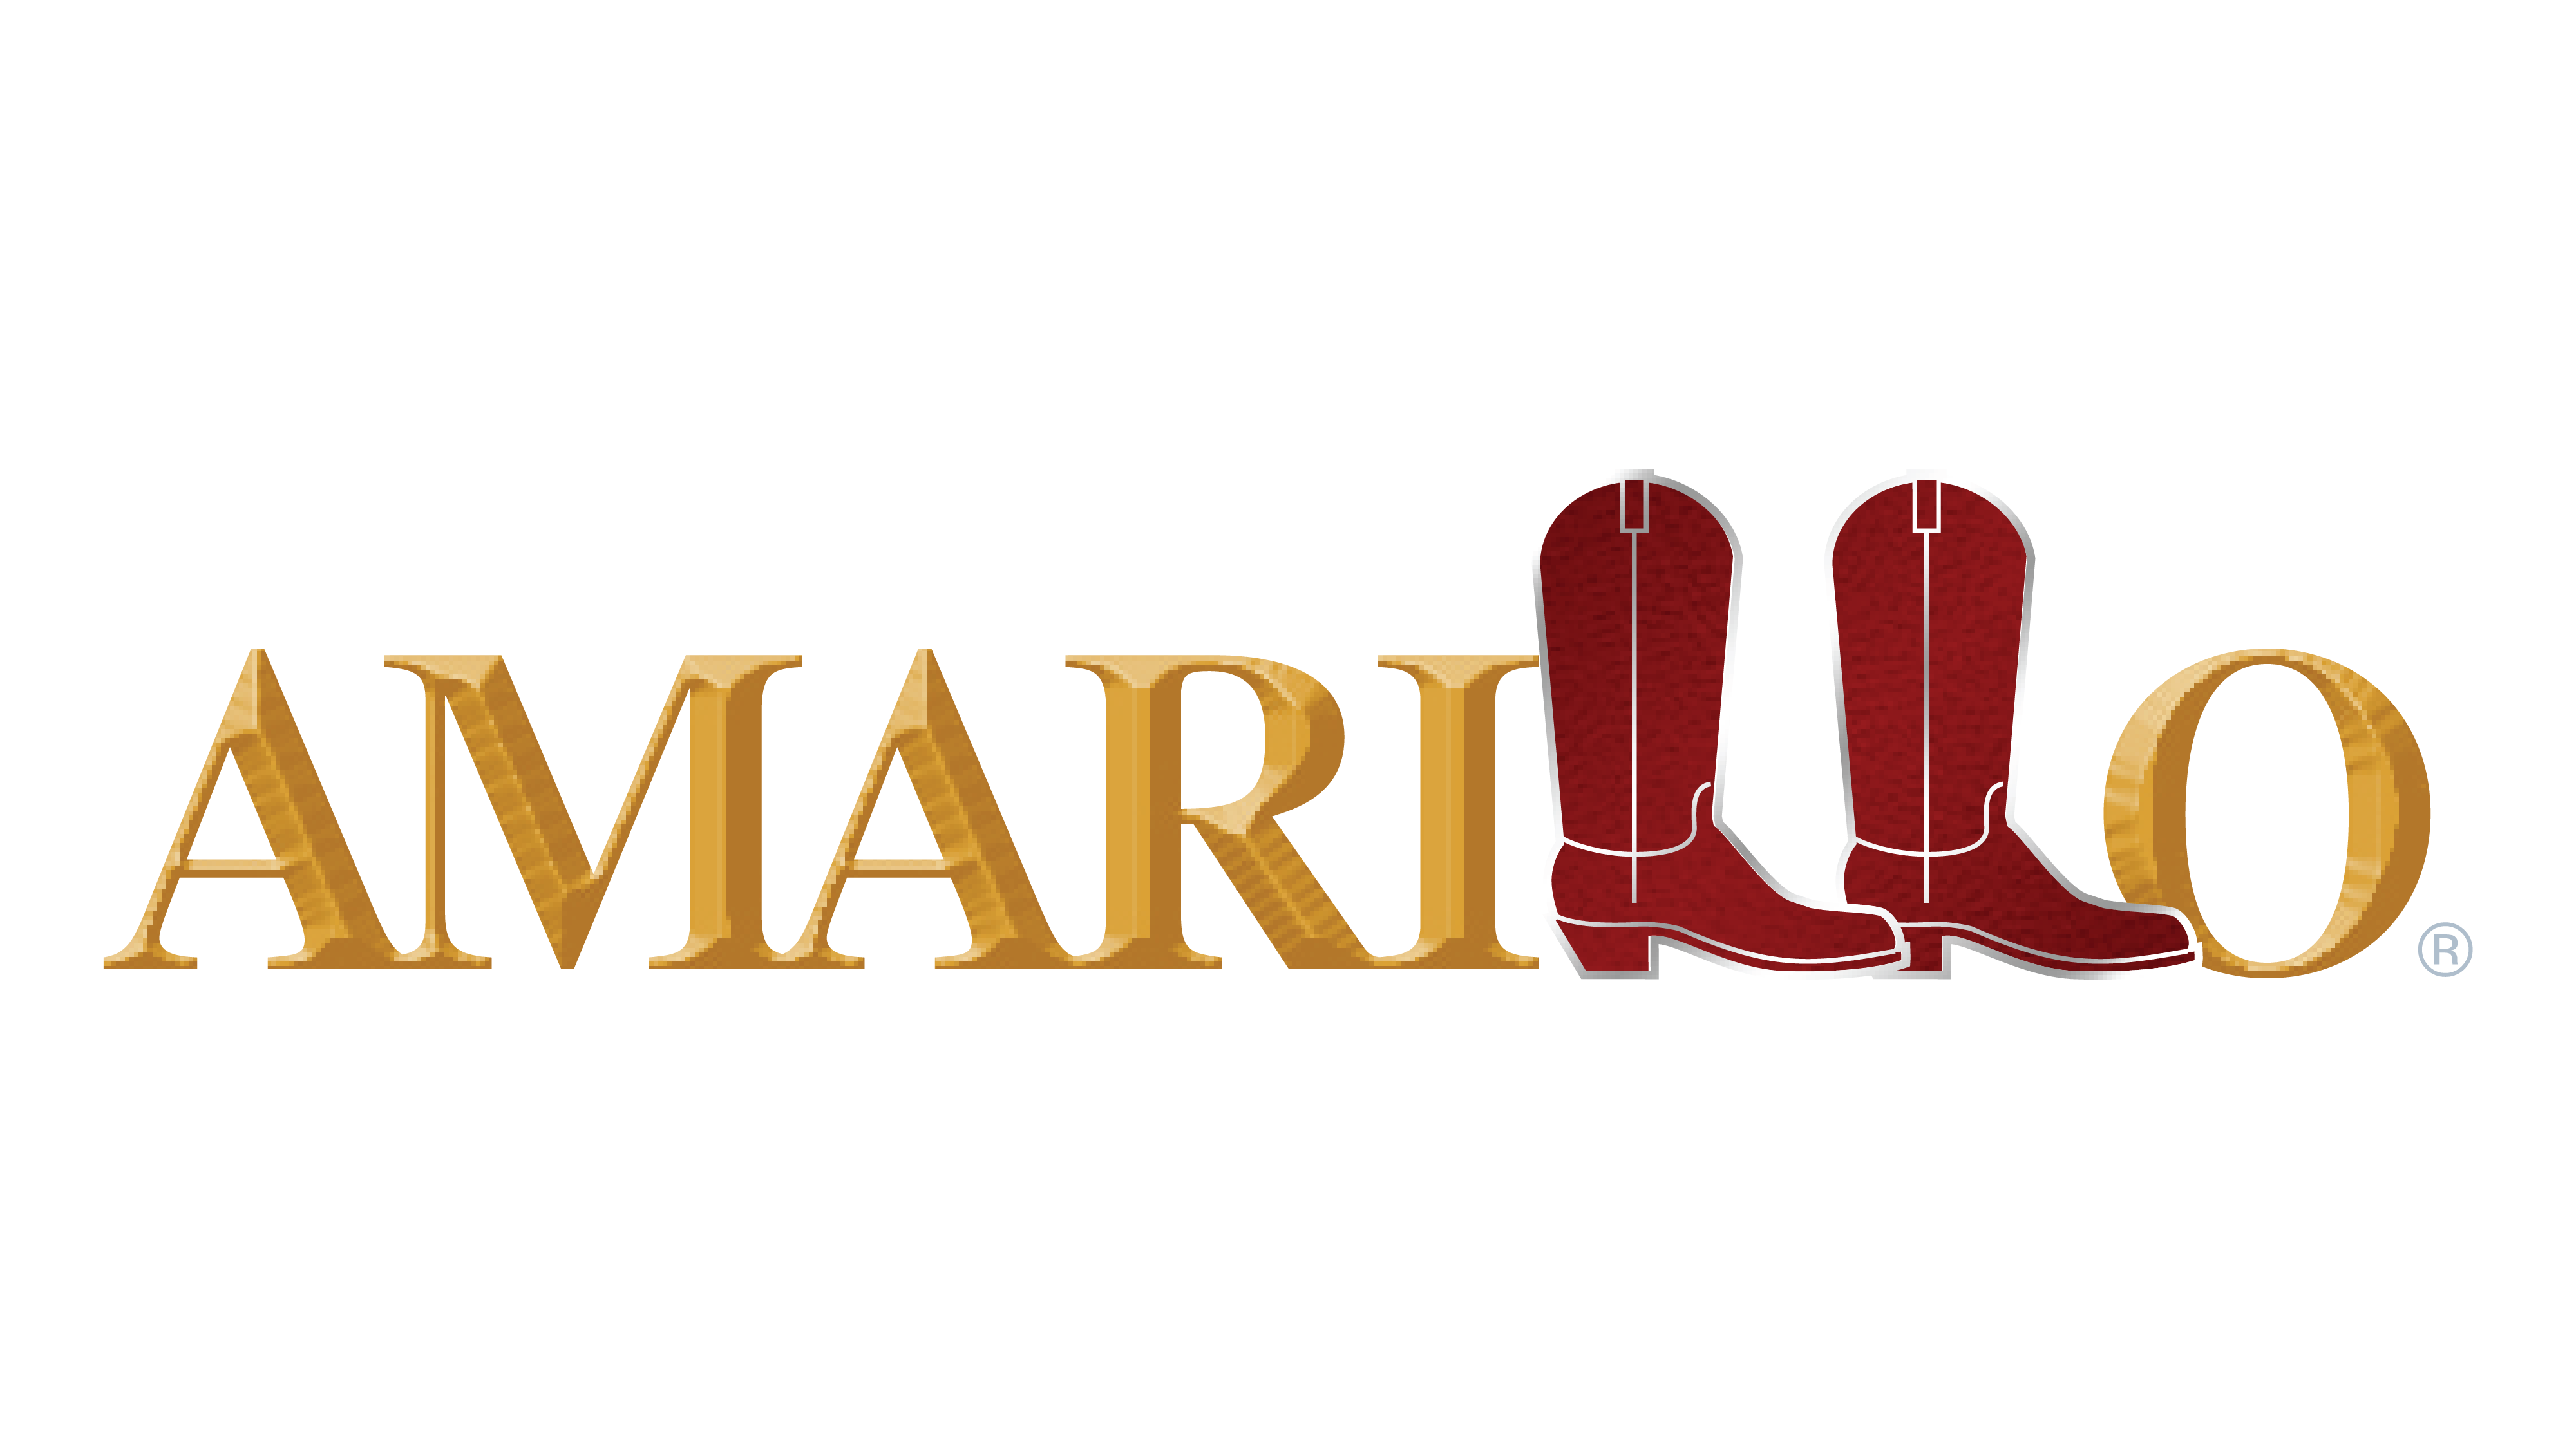 Logo for Amarillo